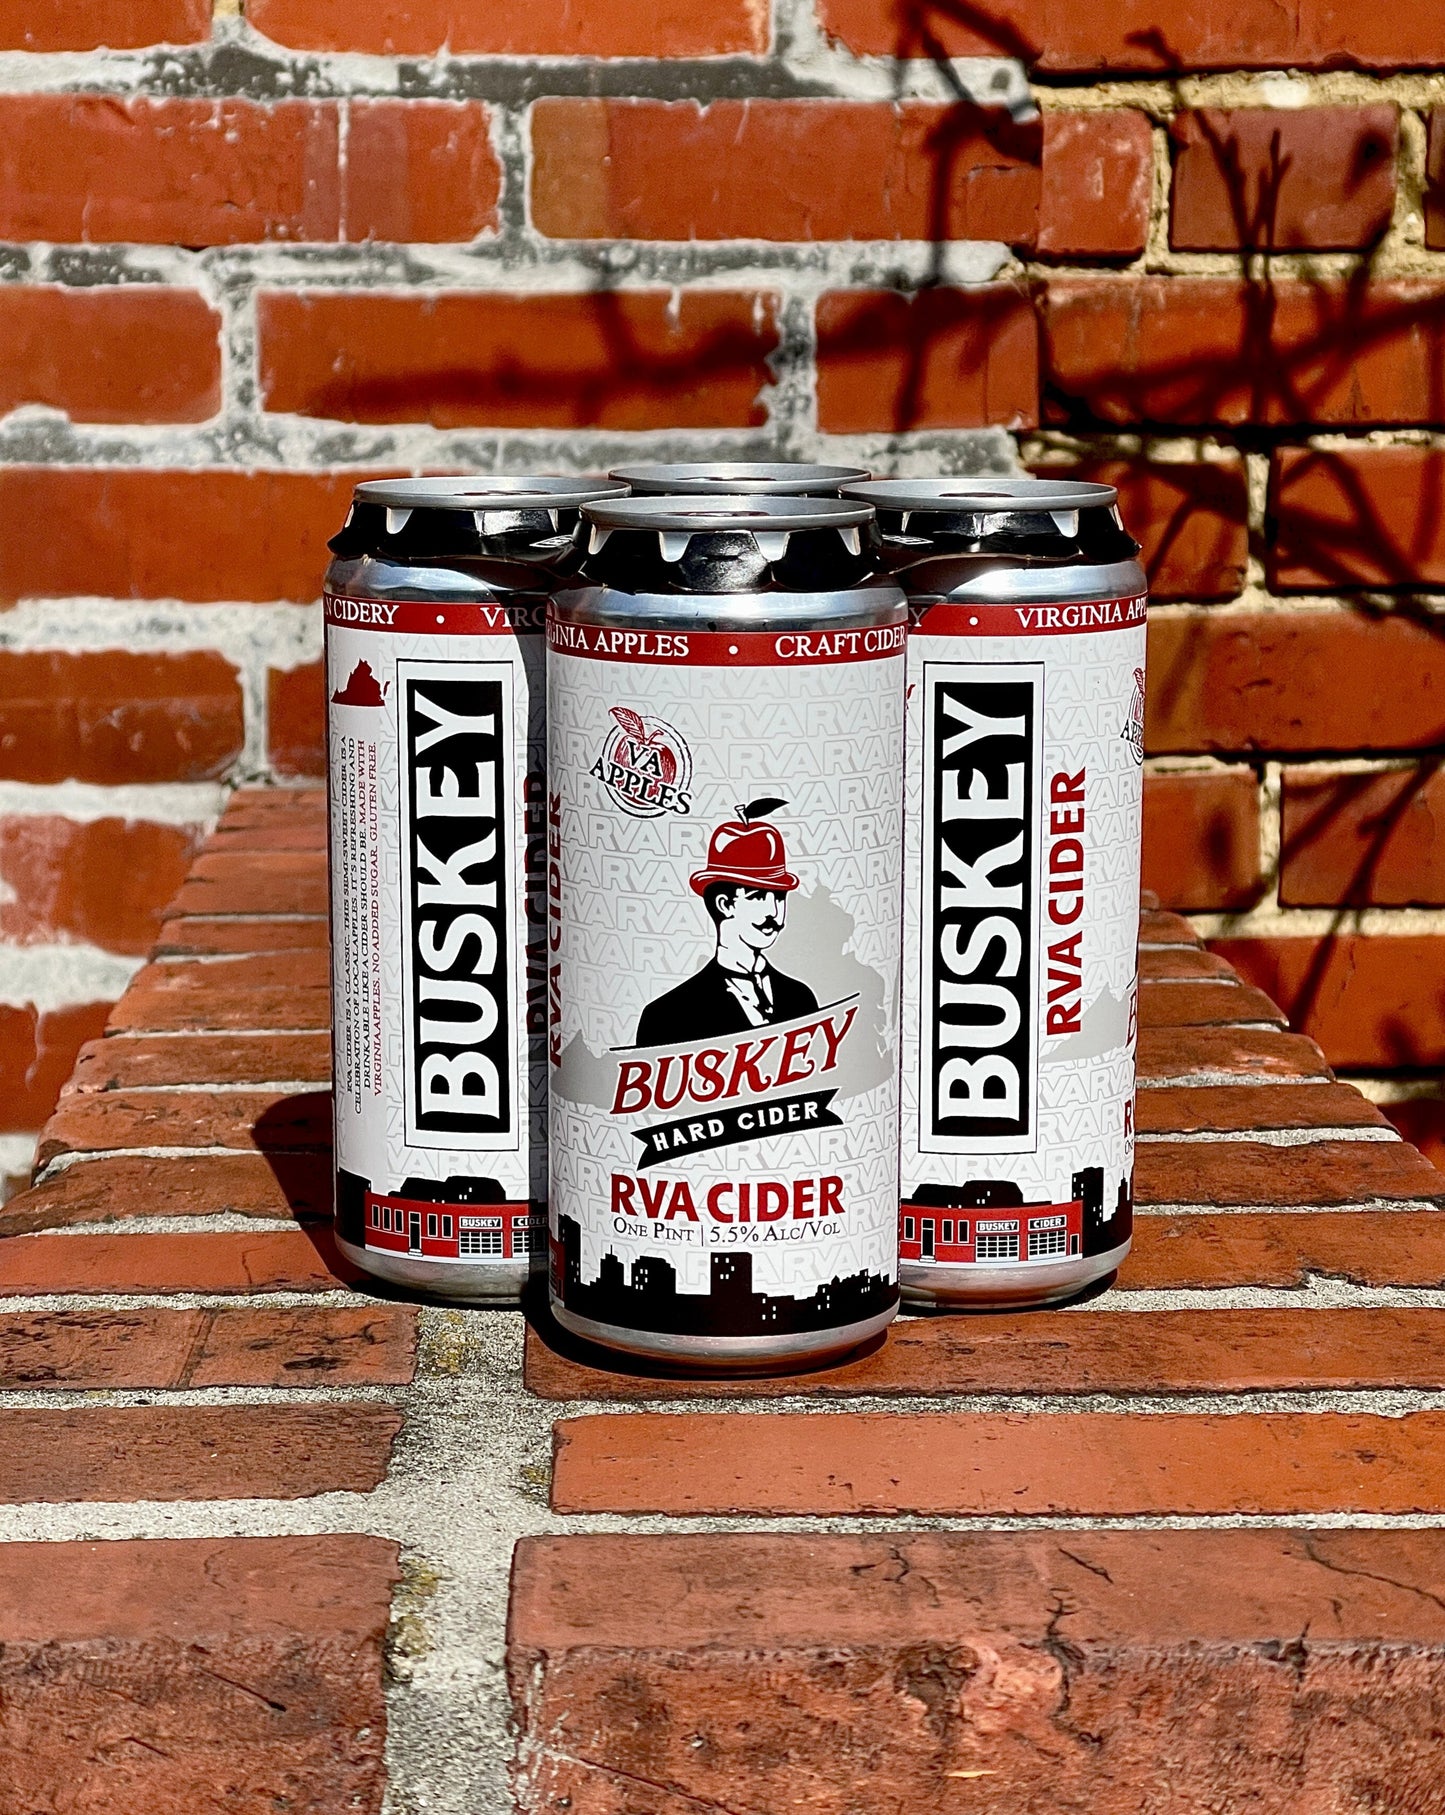 Buskey RVA Cider (4-pack or Case)